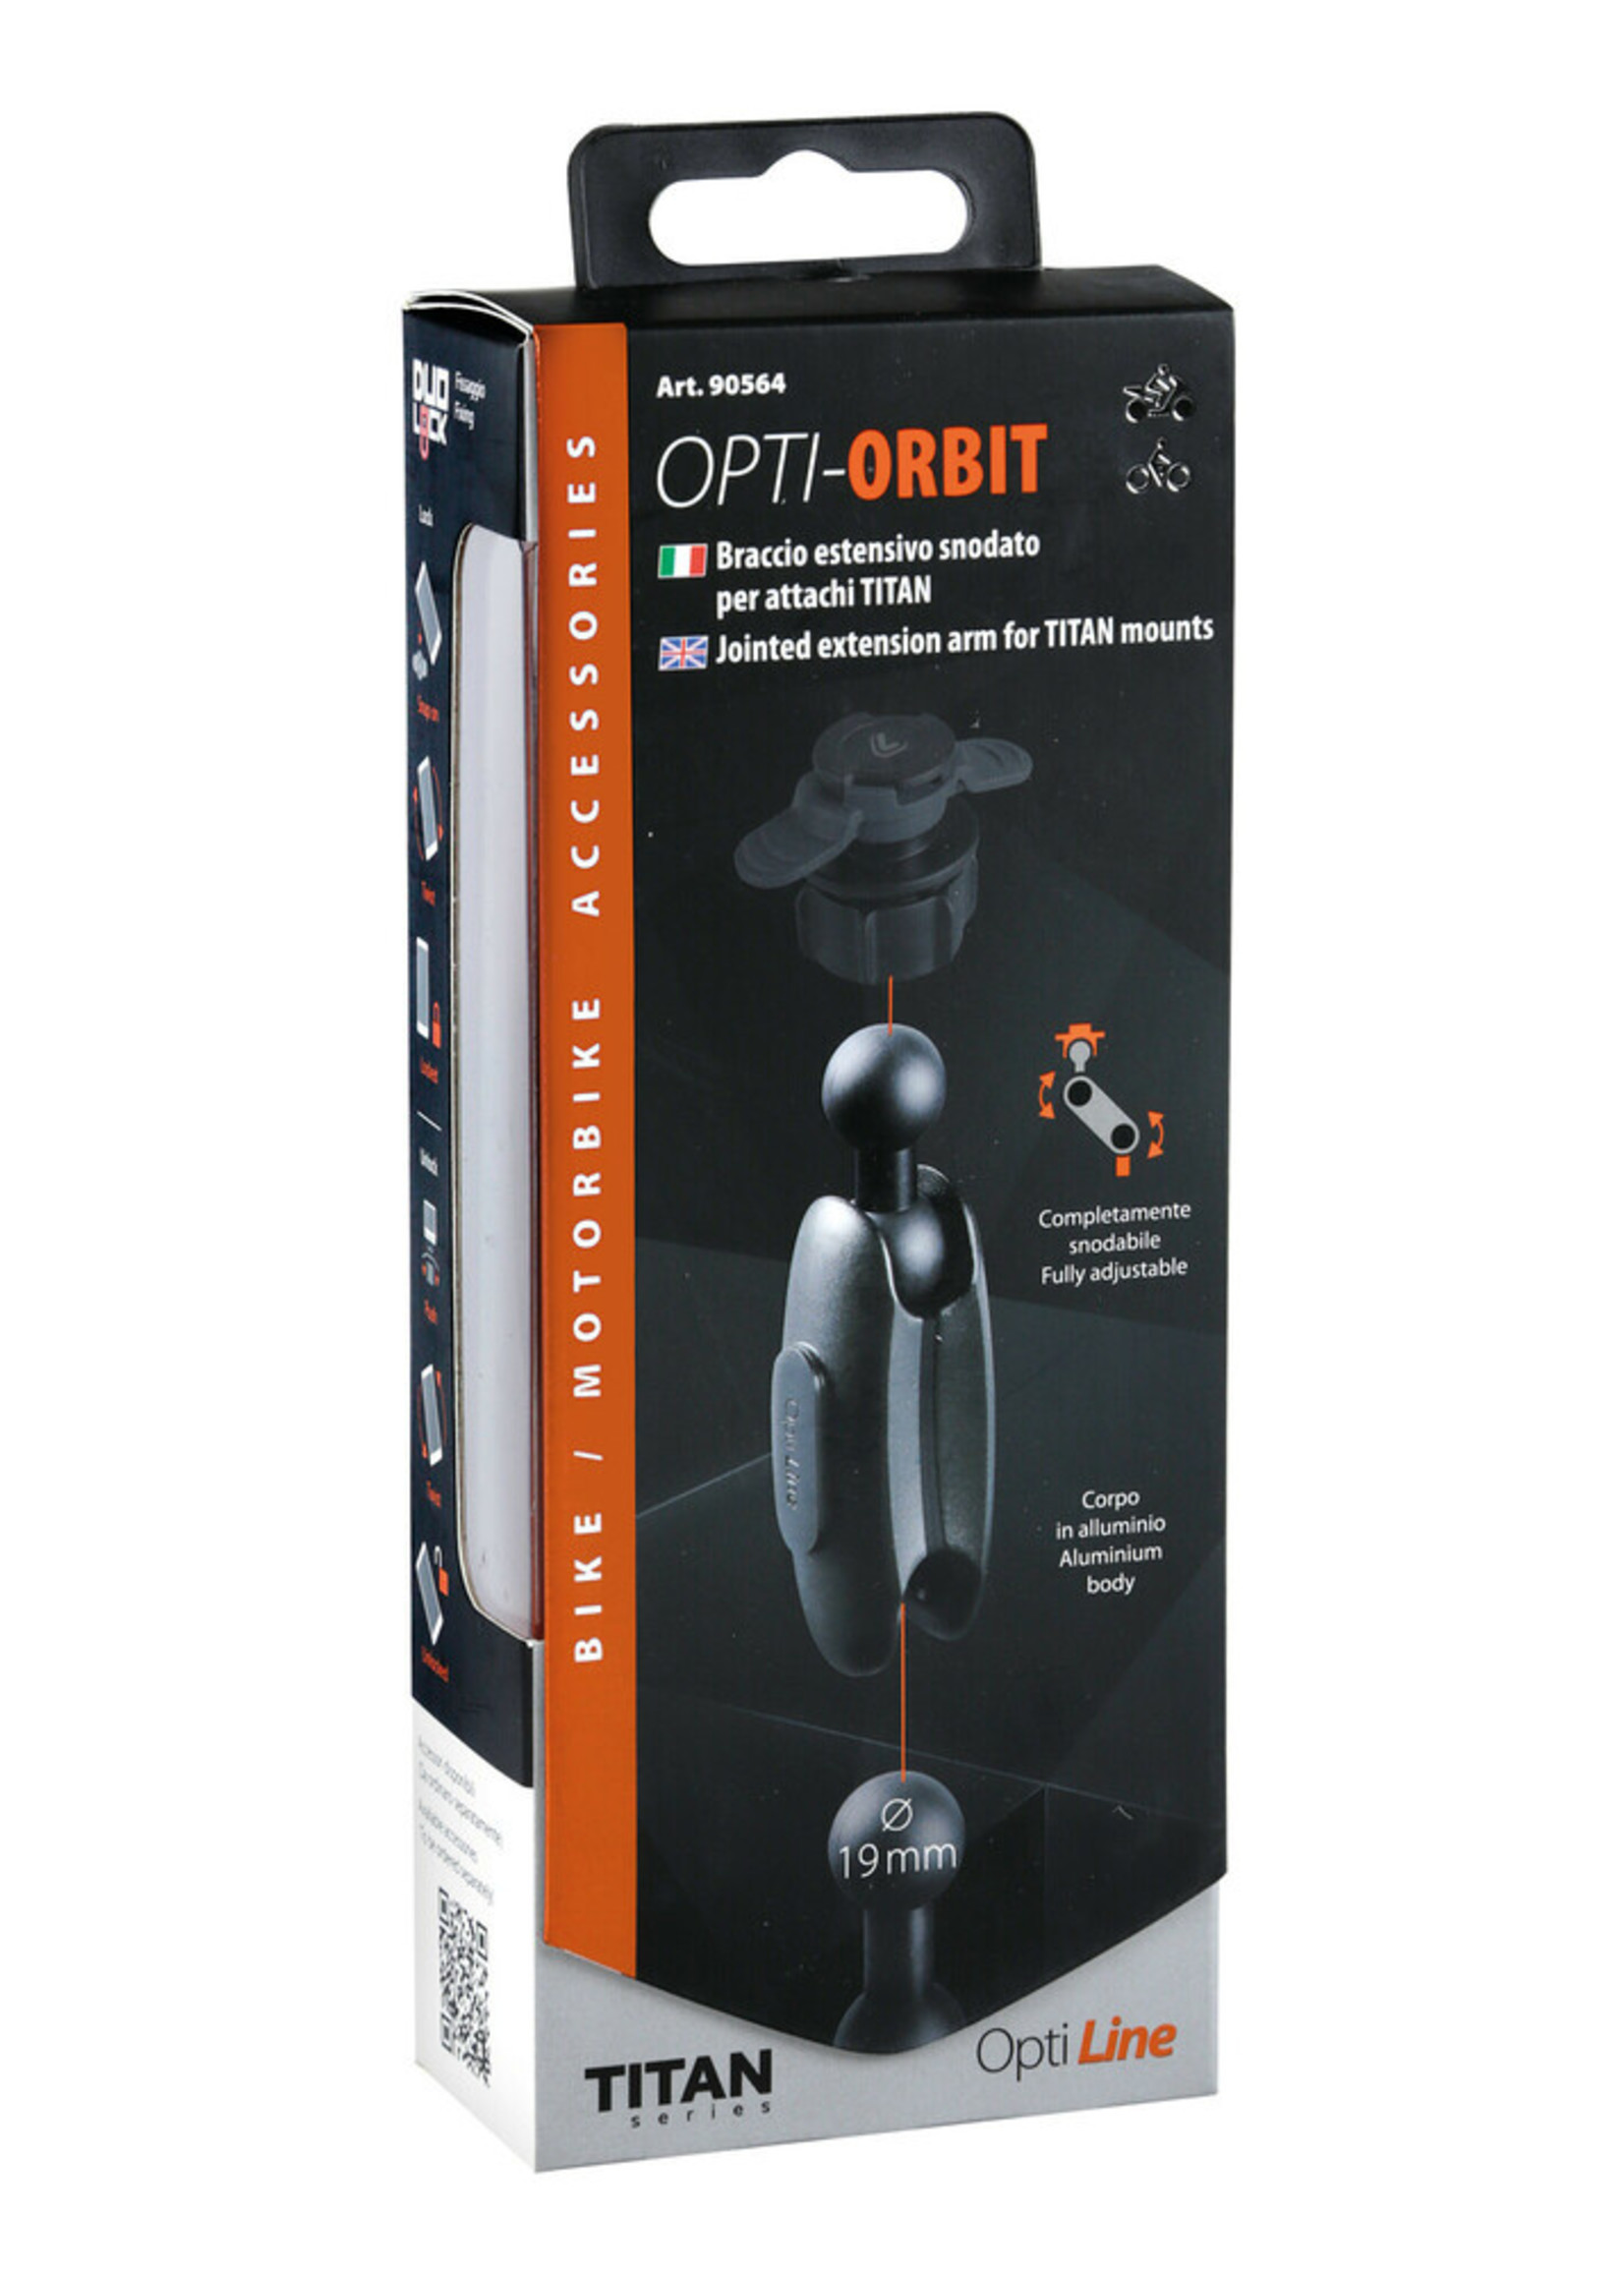 Optiline Titan Orbit, jointed extension arm for Titan mounts